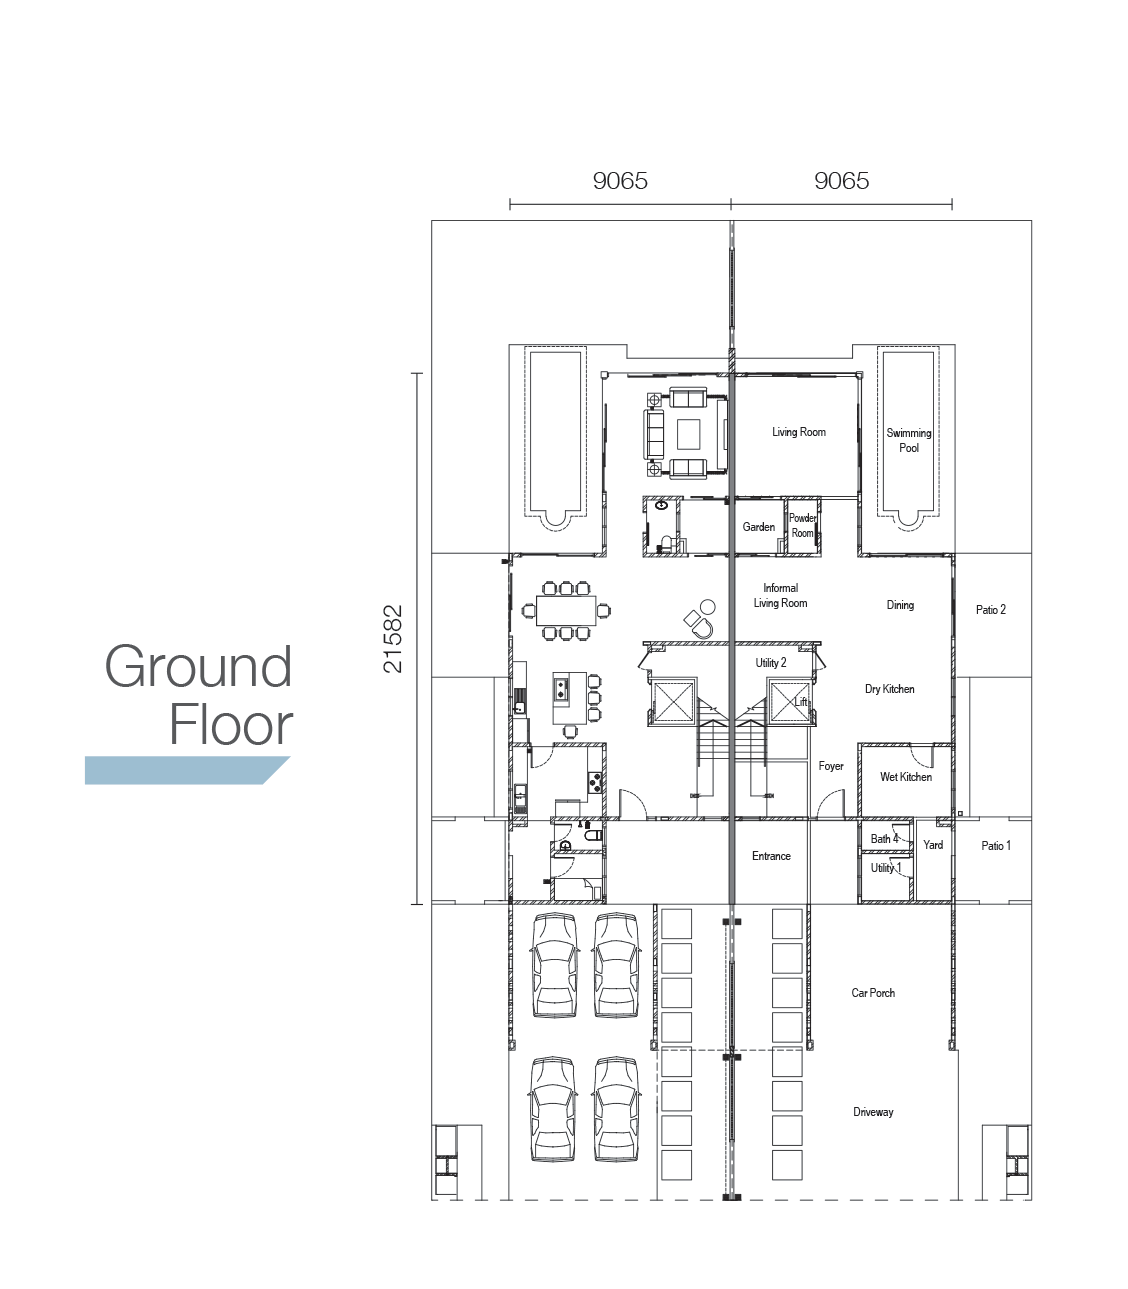 Sierra Hijauan - Type RB6 - Ground Floor Layout Plan